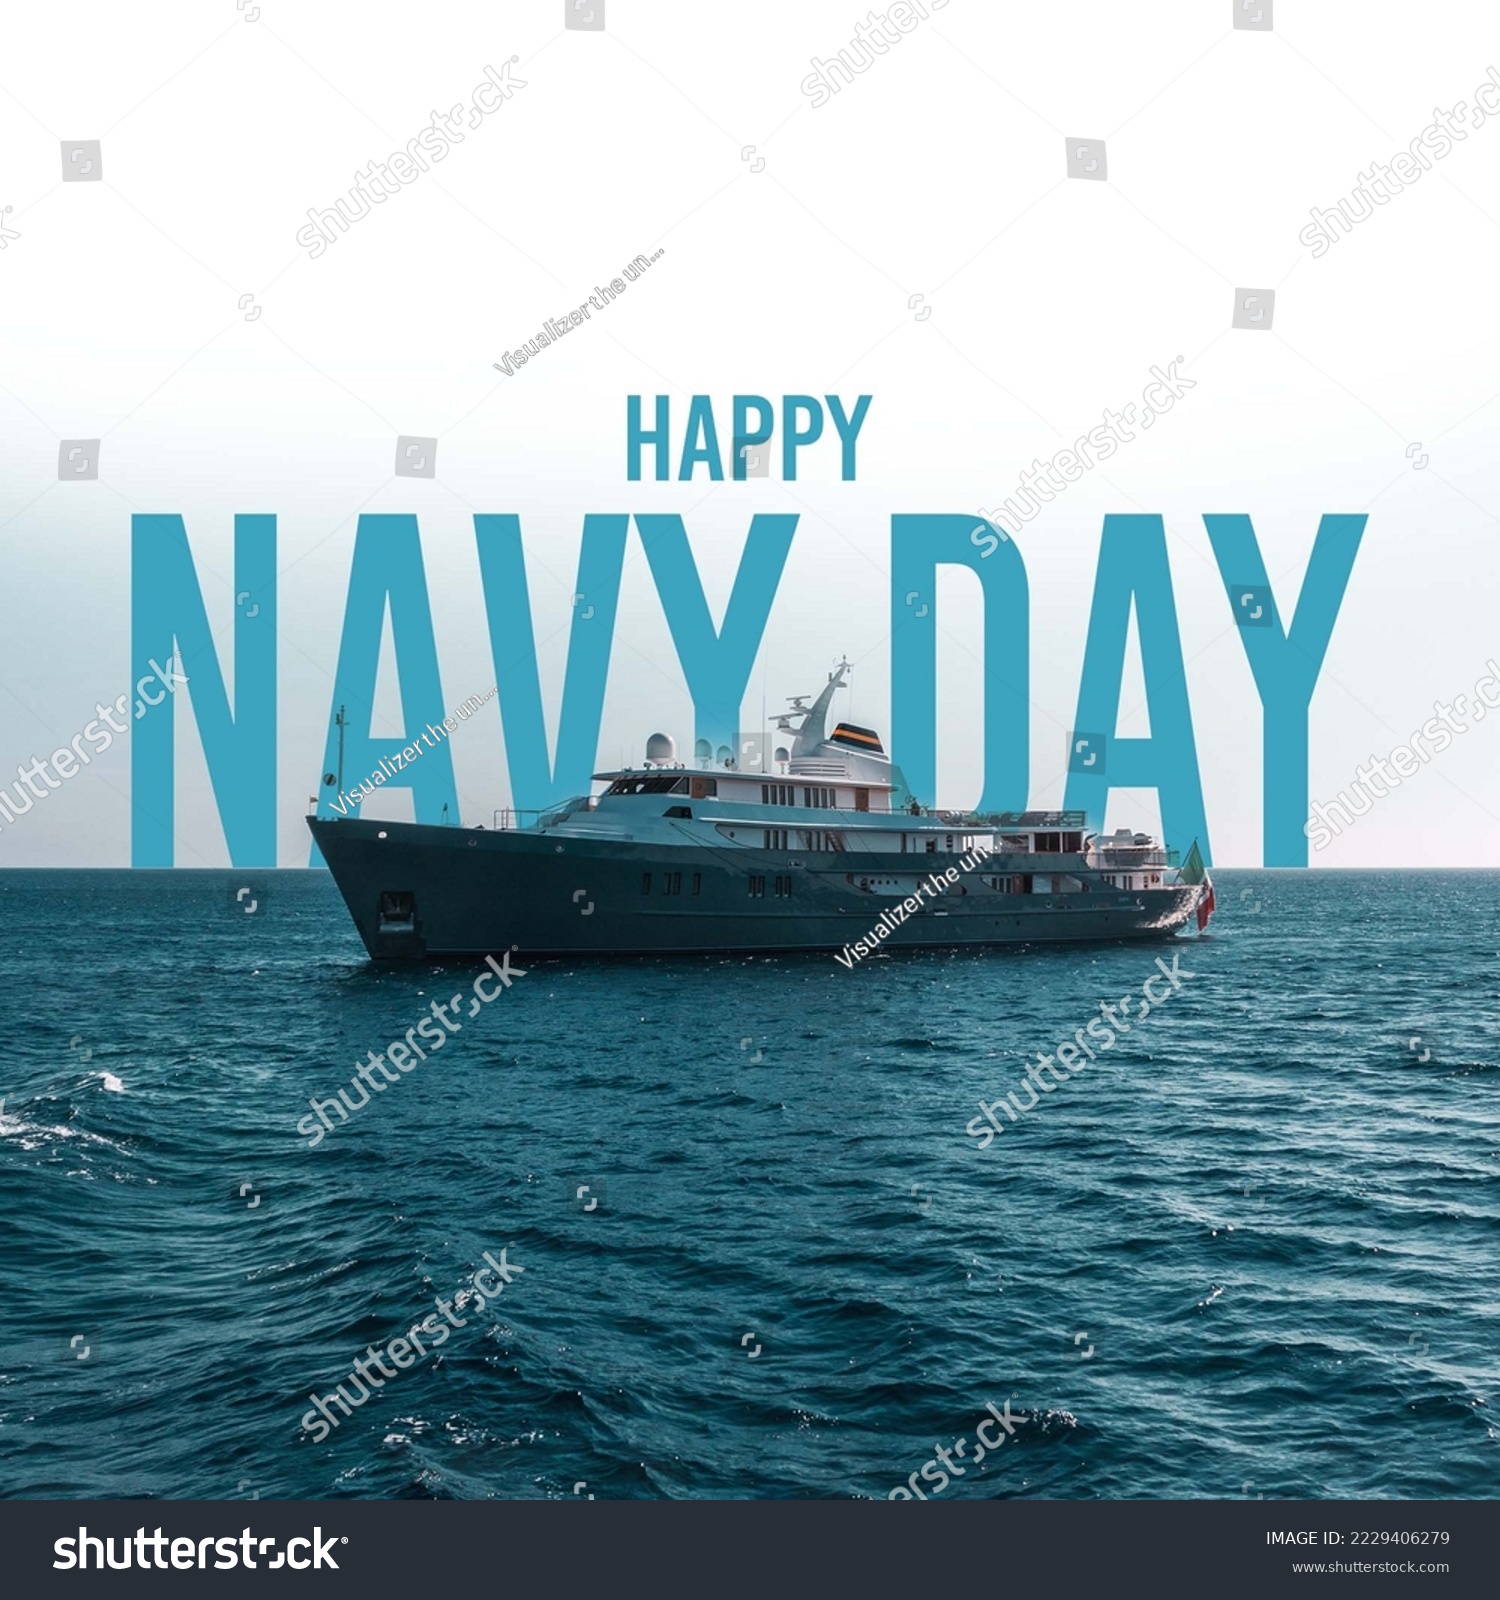 Happy Indian Navy Day, Happy Navy Day #2229406279